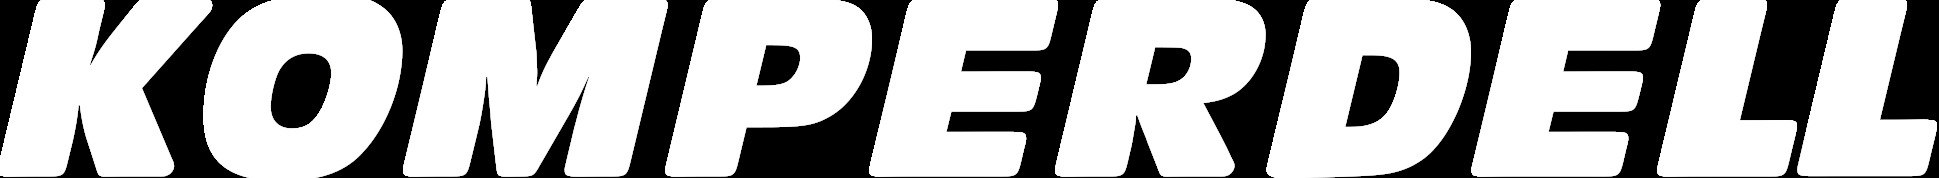 Komperdell logo